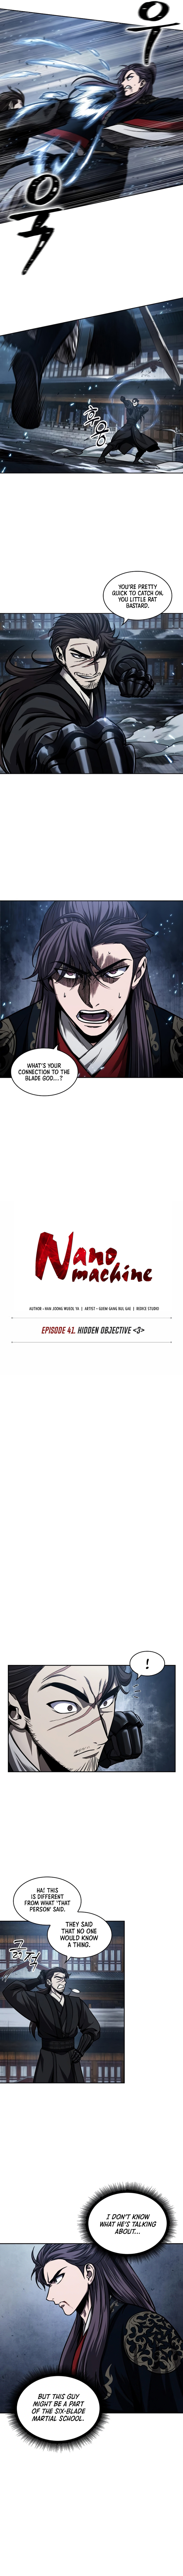 Nano Machine image